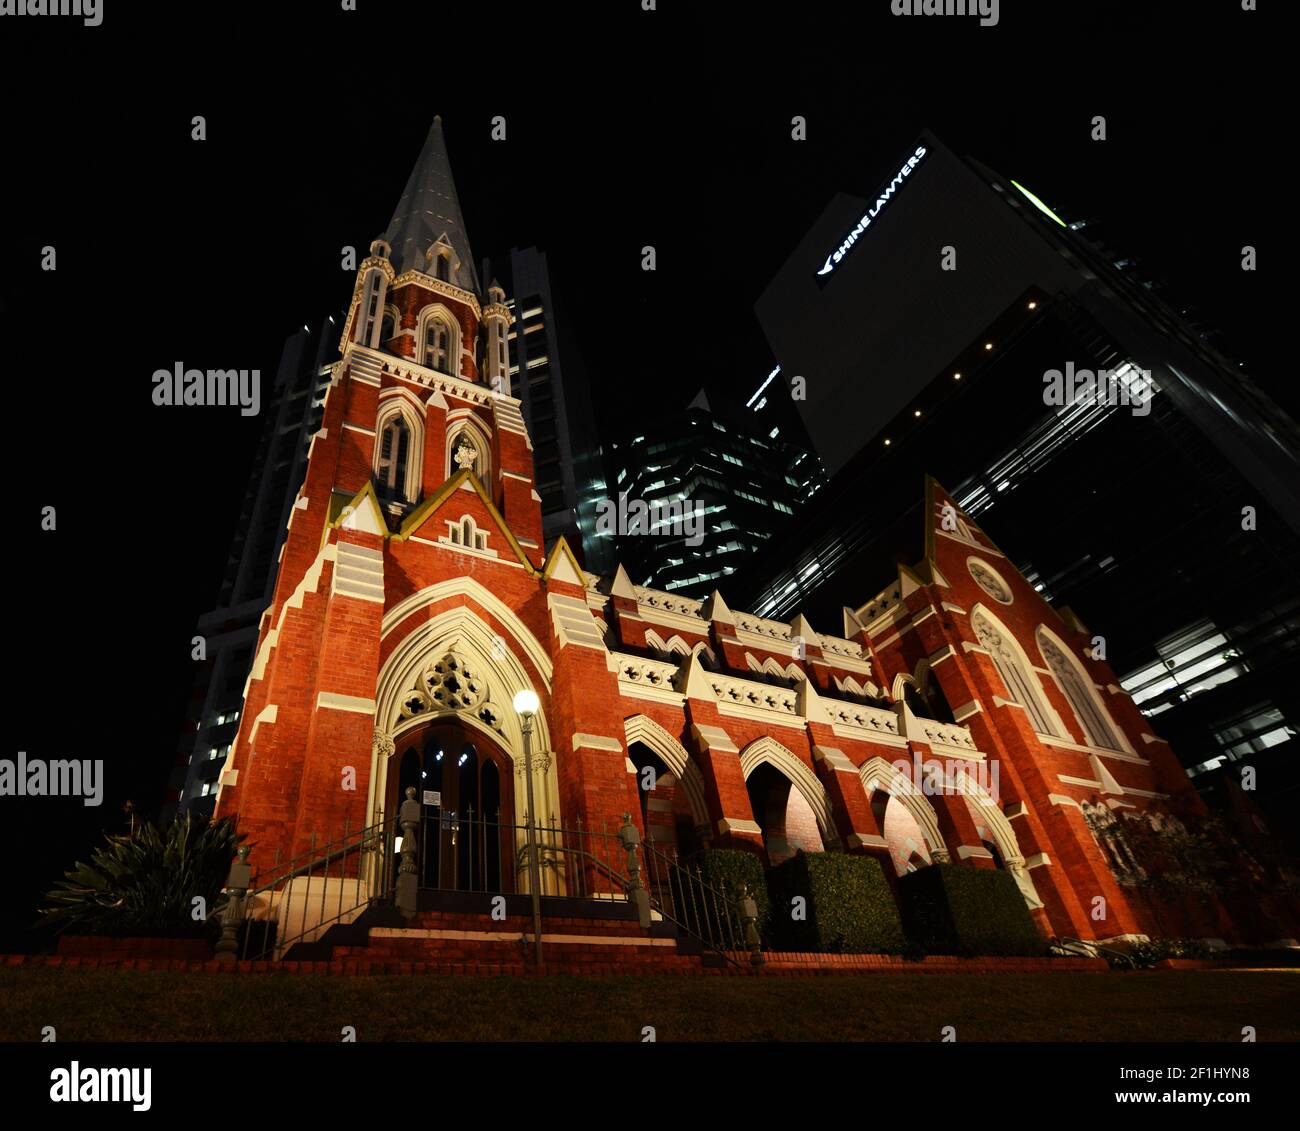 Albert Street Uniting Church at Night, Brisbane, Australie. Banque D'Images